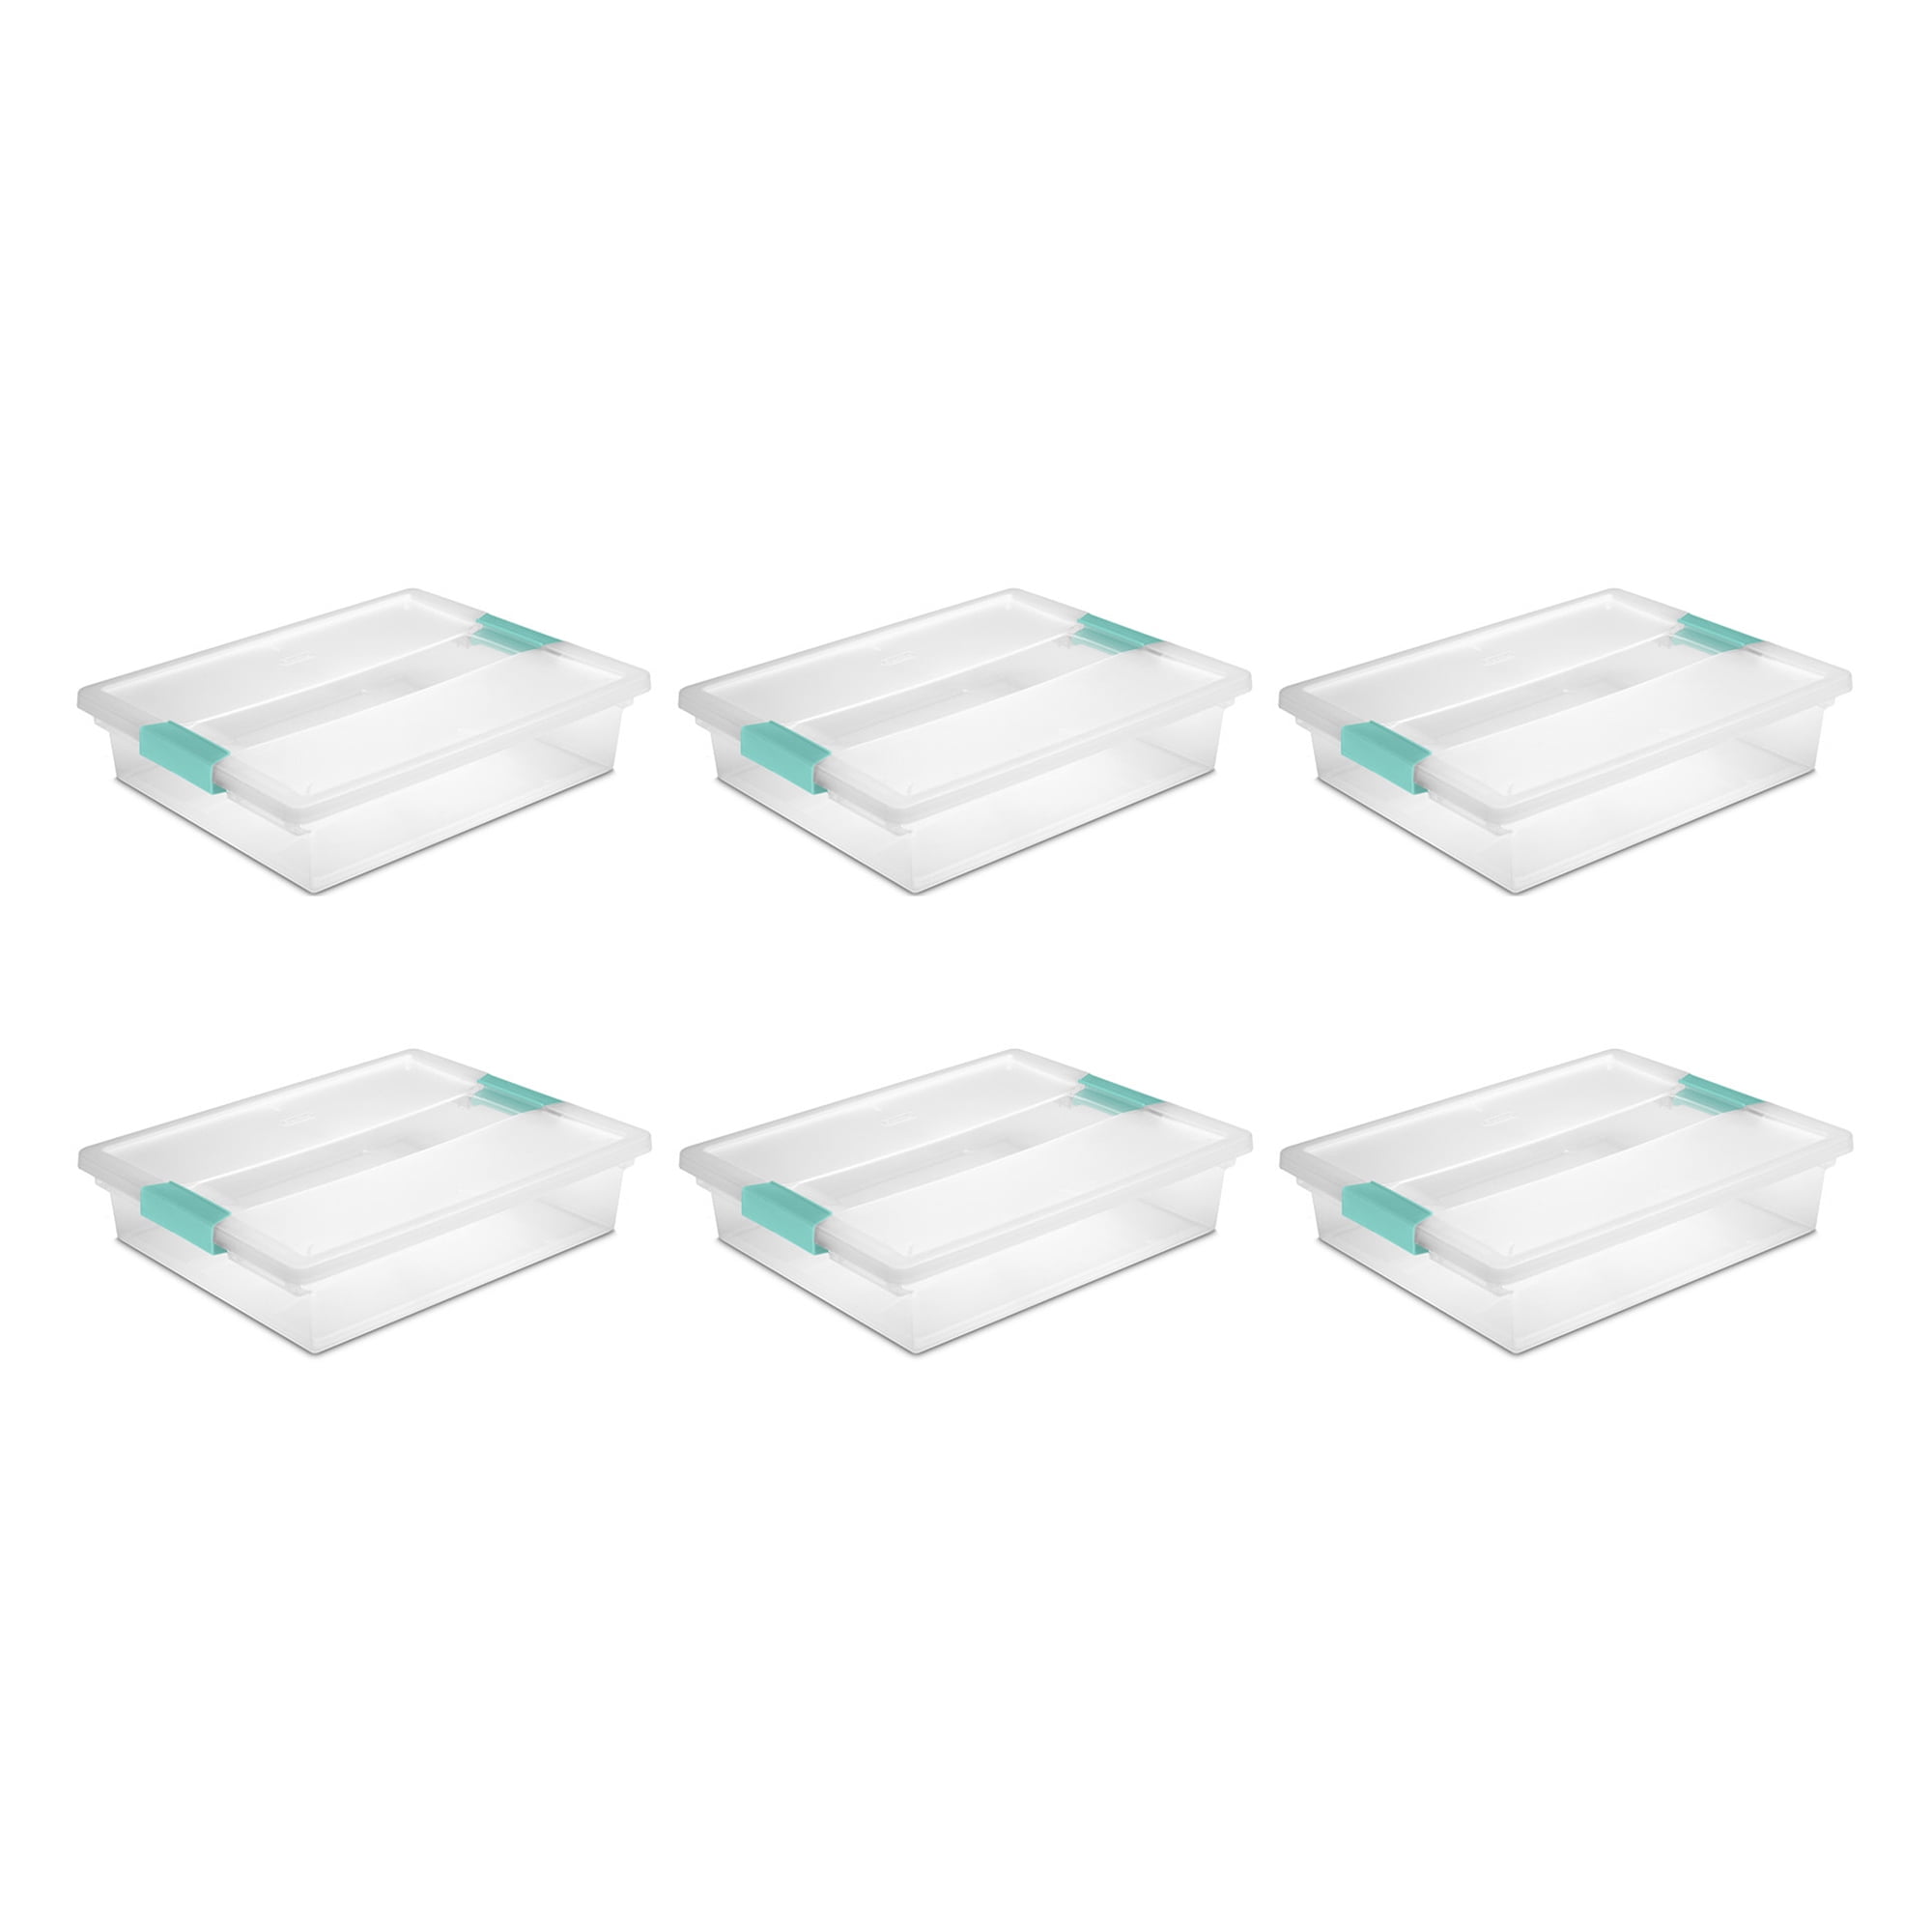 Sterilite 3-Layer Stack and Carry Organizer - Clear/Aqua, 1 ct